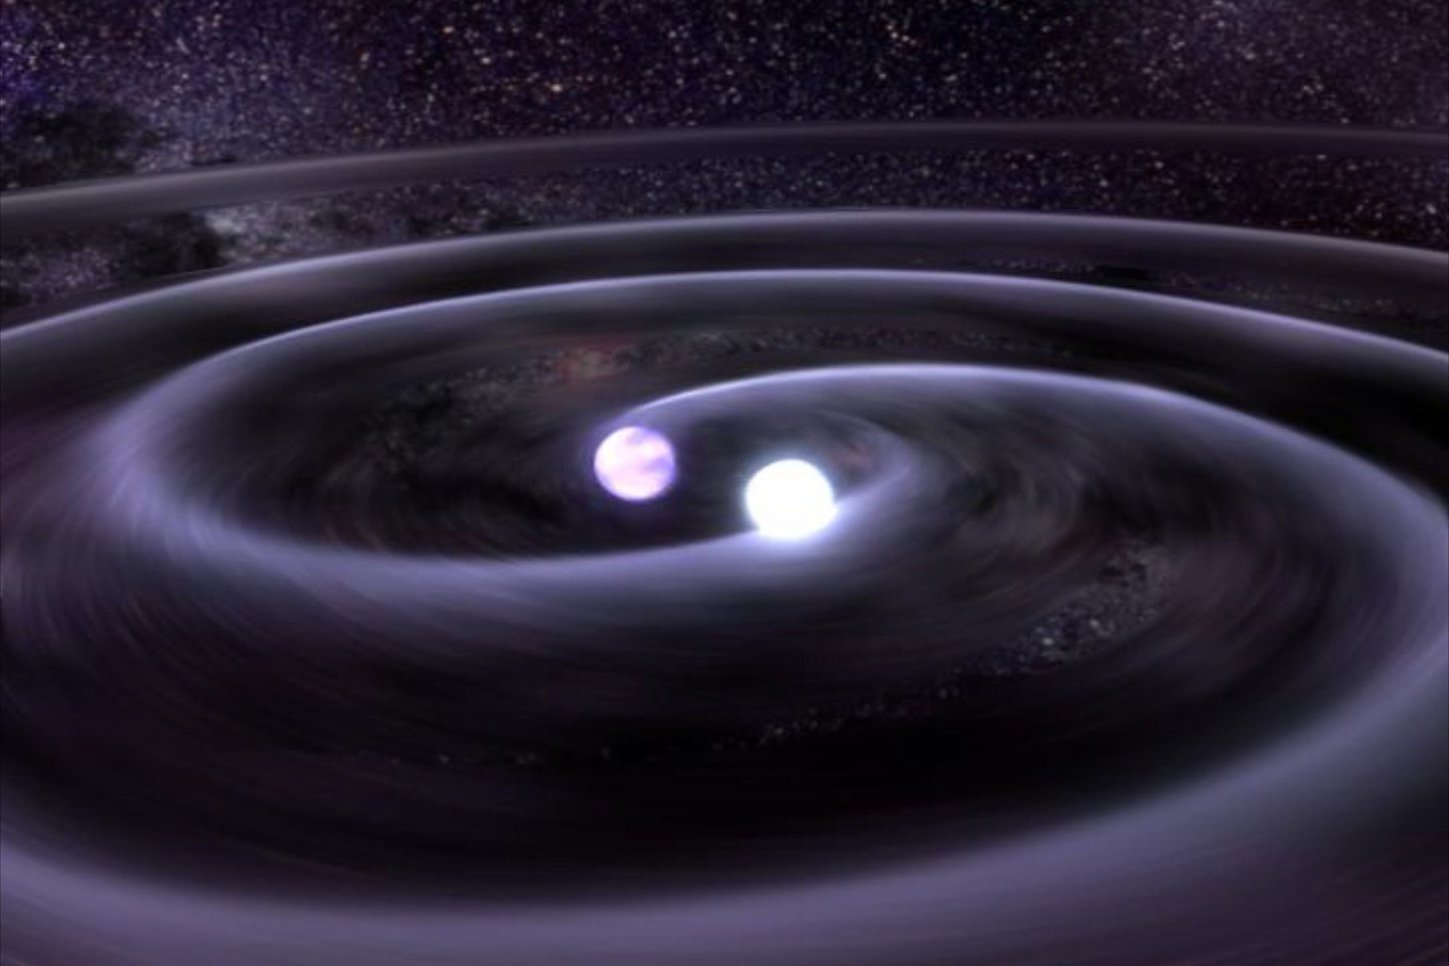 Black Holes Happen to Orbit in each Other